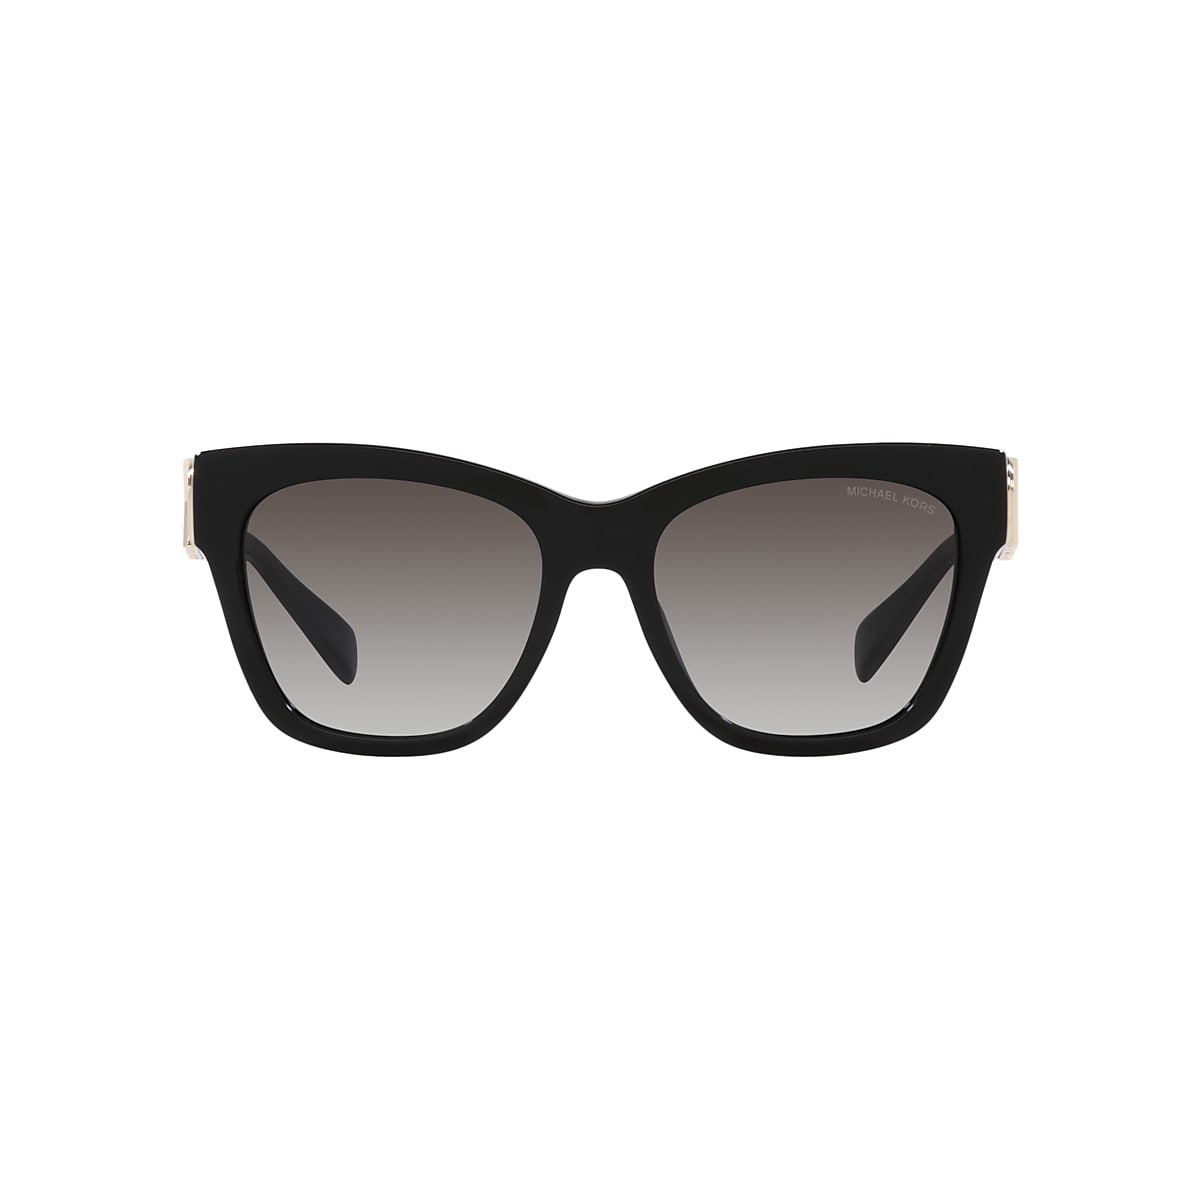 MICHAEL KORS MK2182U Empire Square Black - Woman Sunglasses, Dark Grey  Gradient Lens